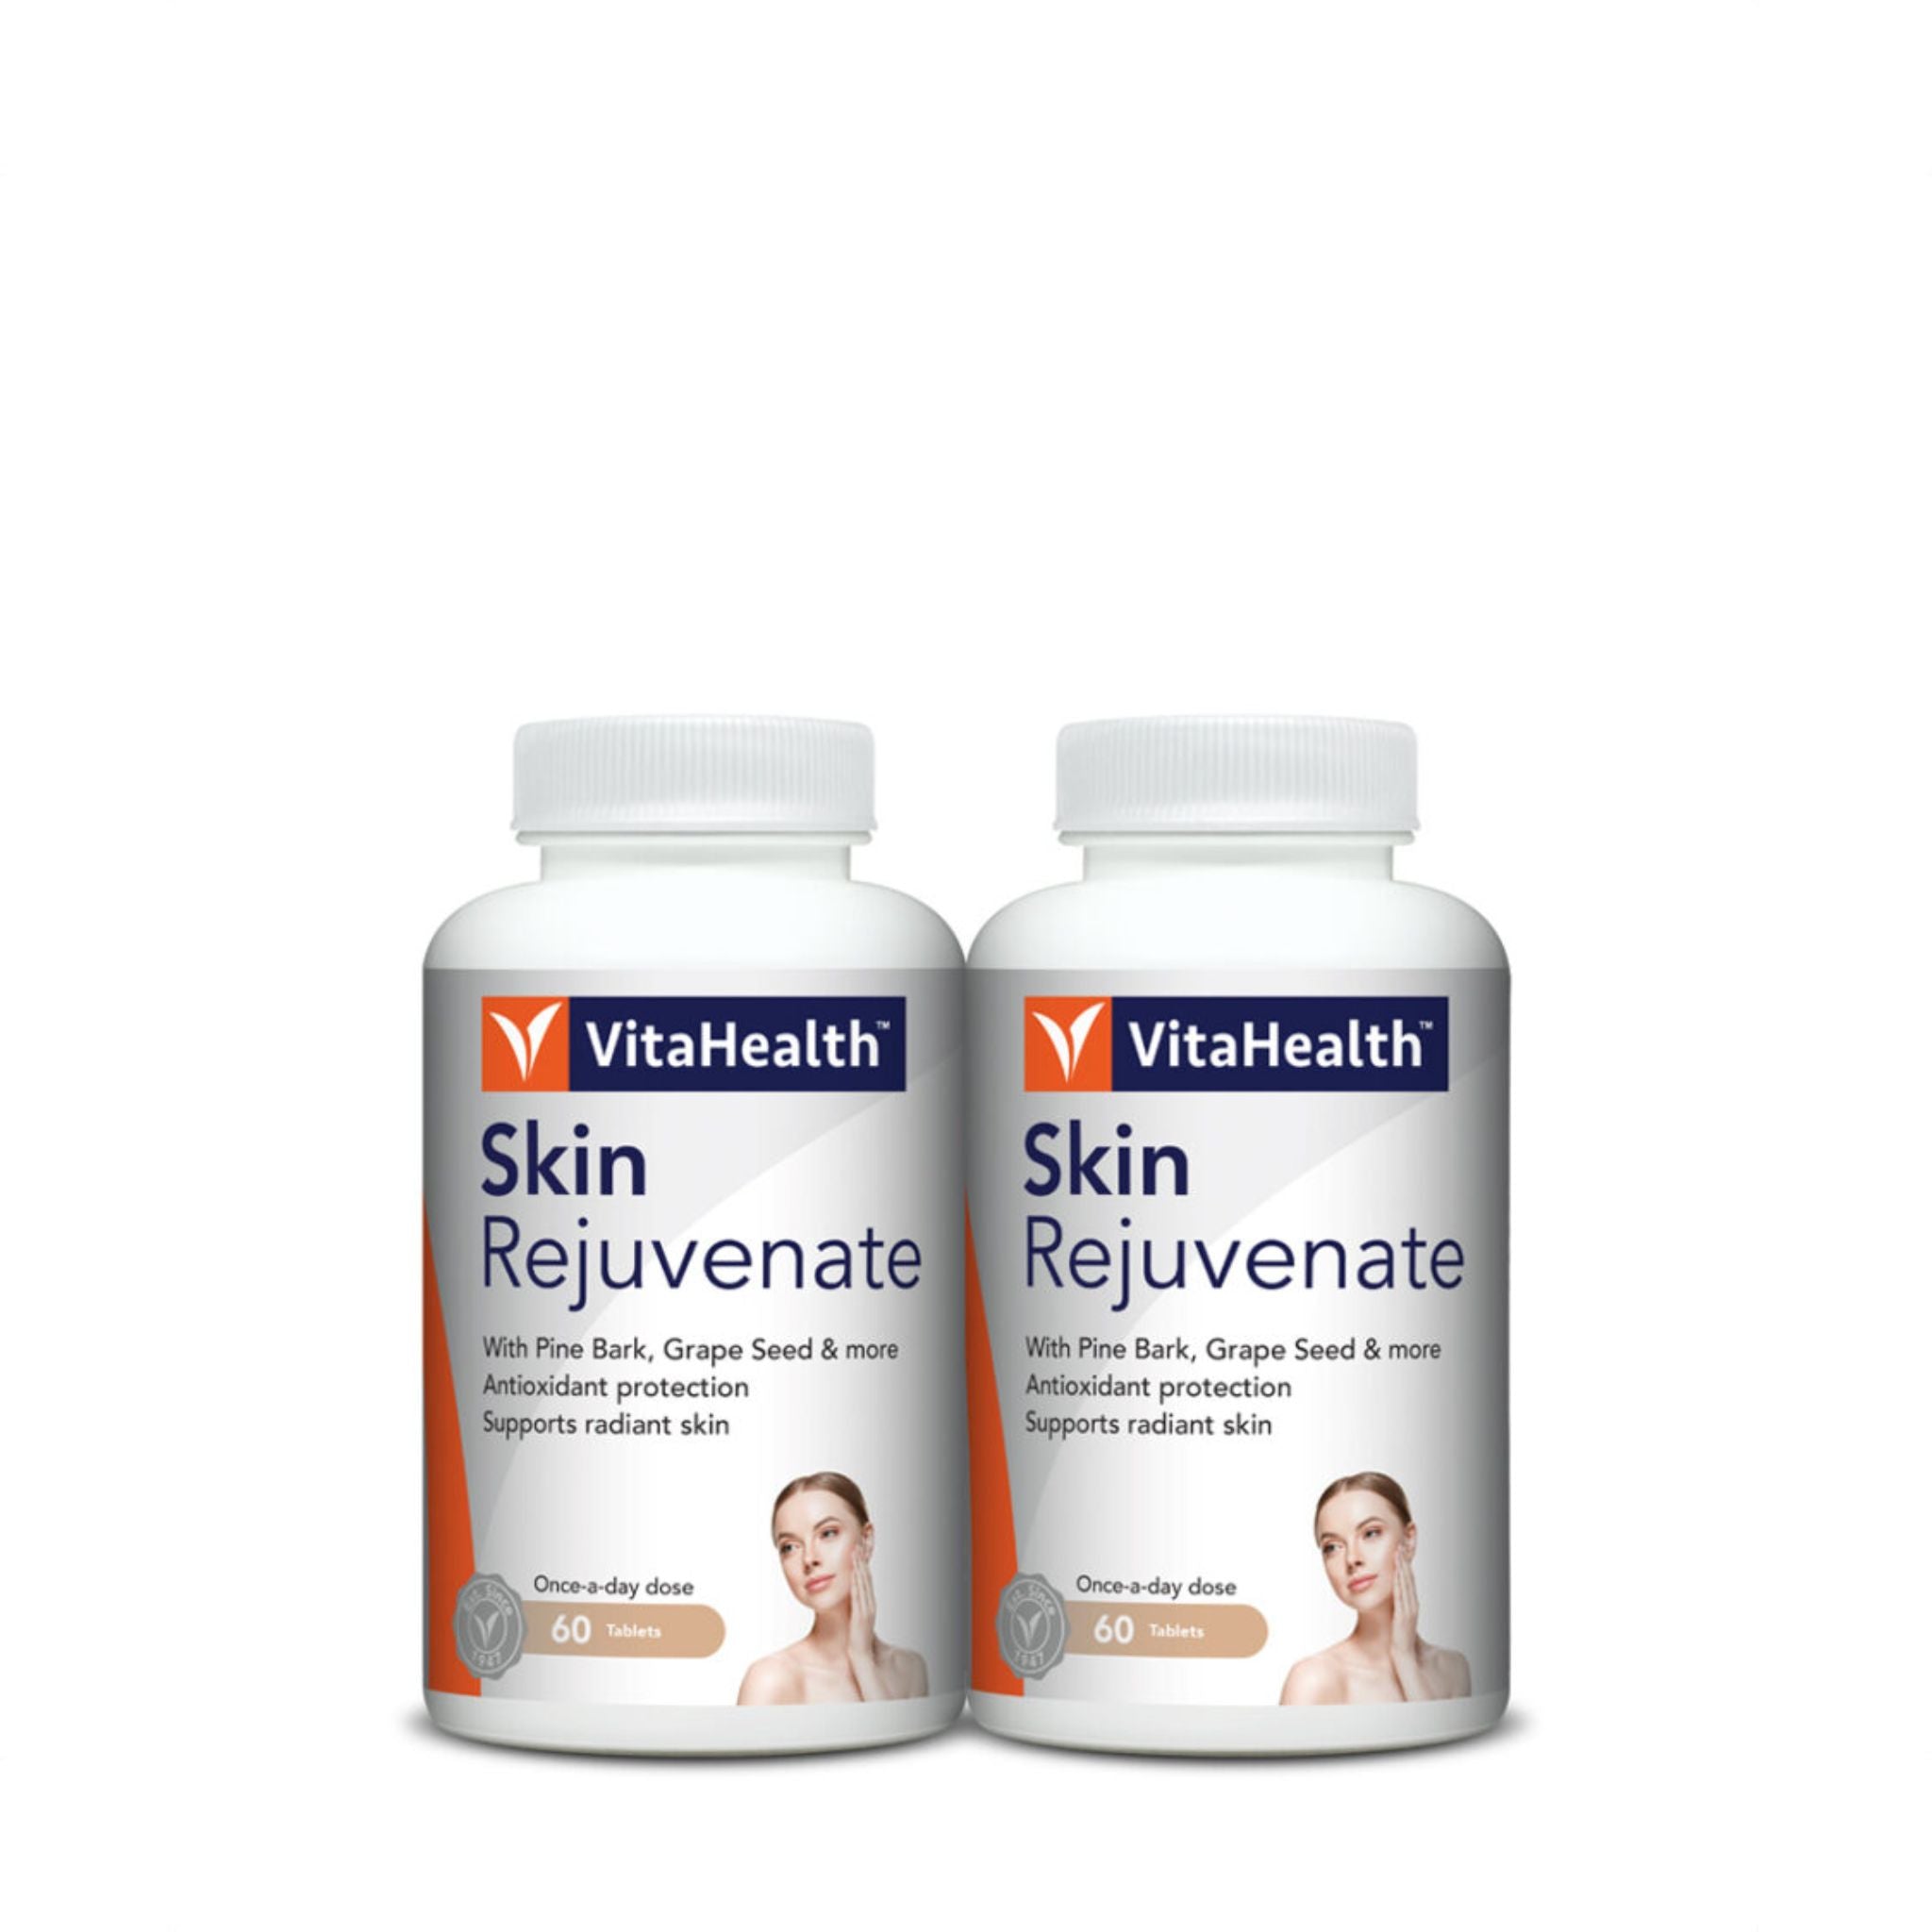 VitaHealth Skin Rejuvenate (Twin Pack) - 2 x 60 Tablets